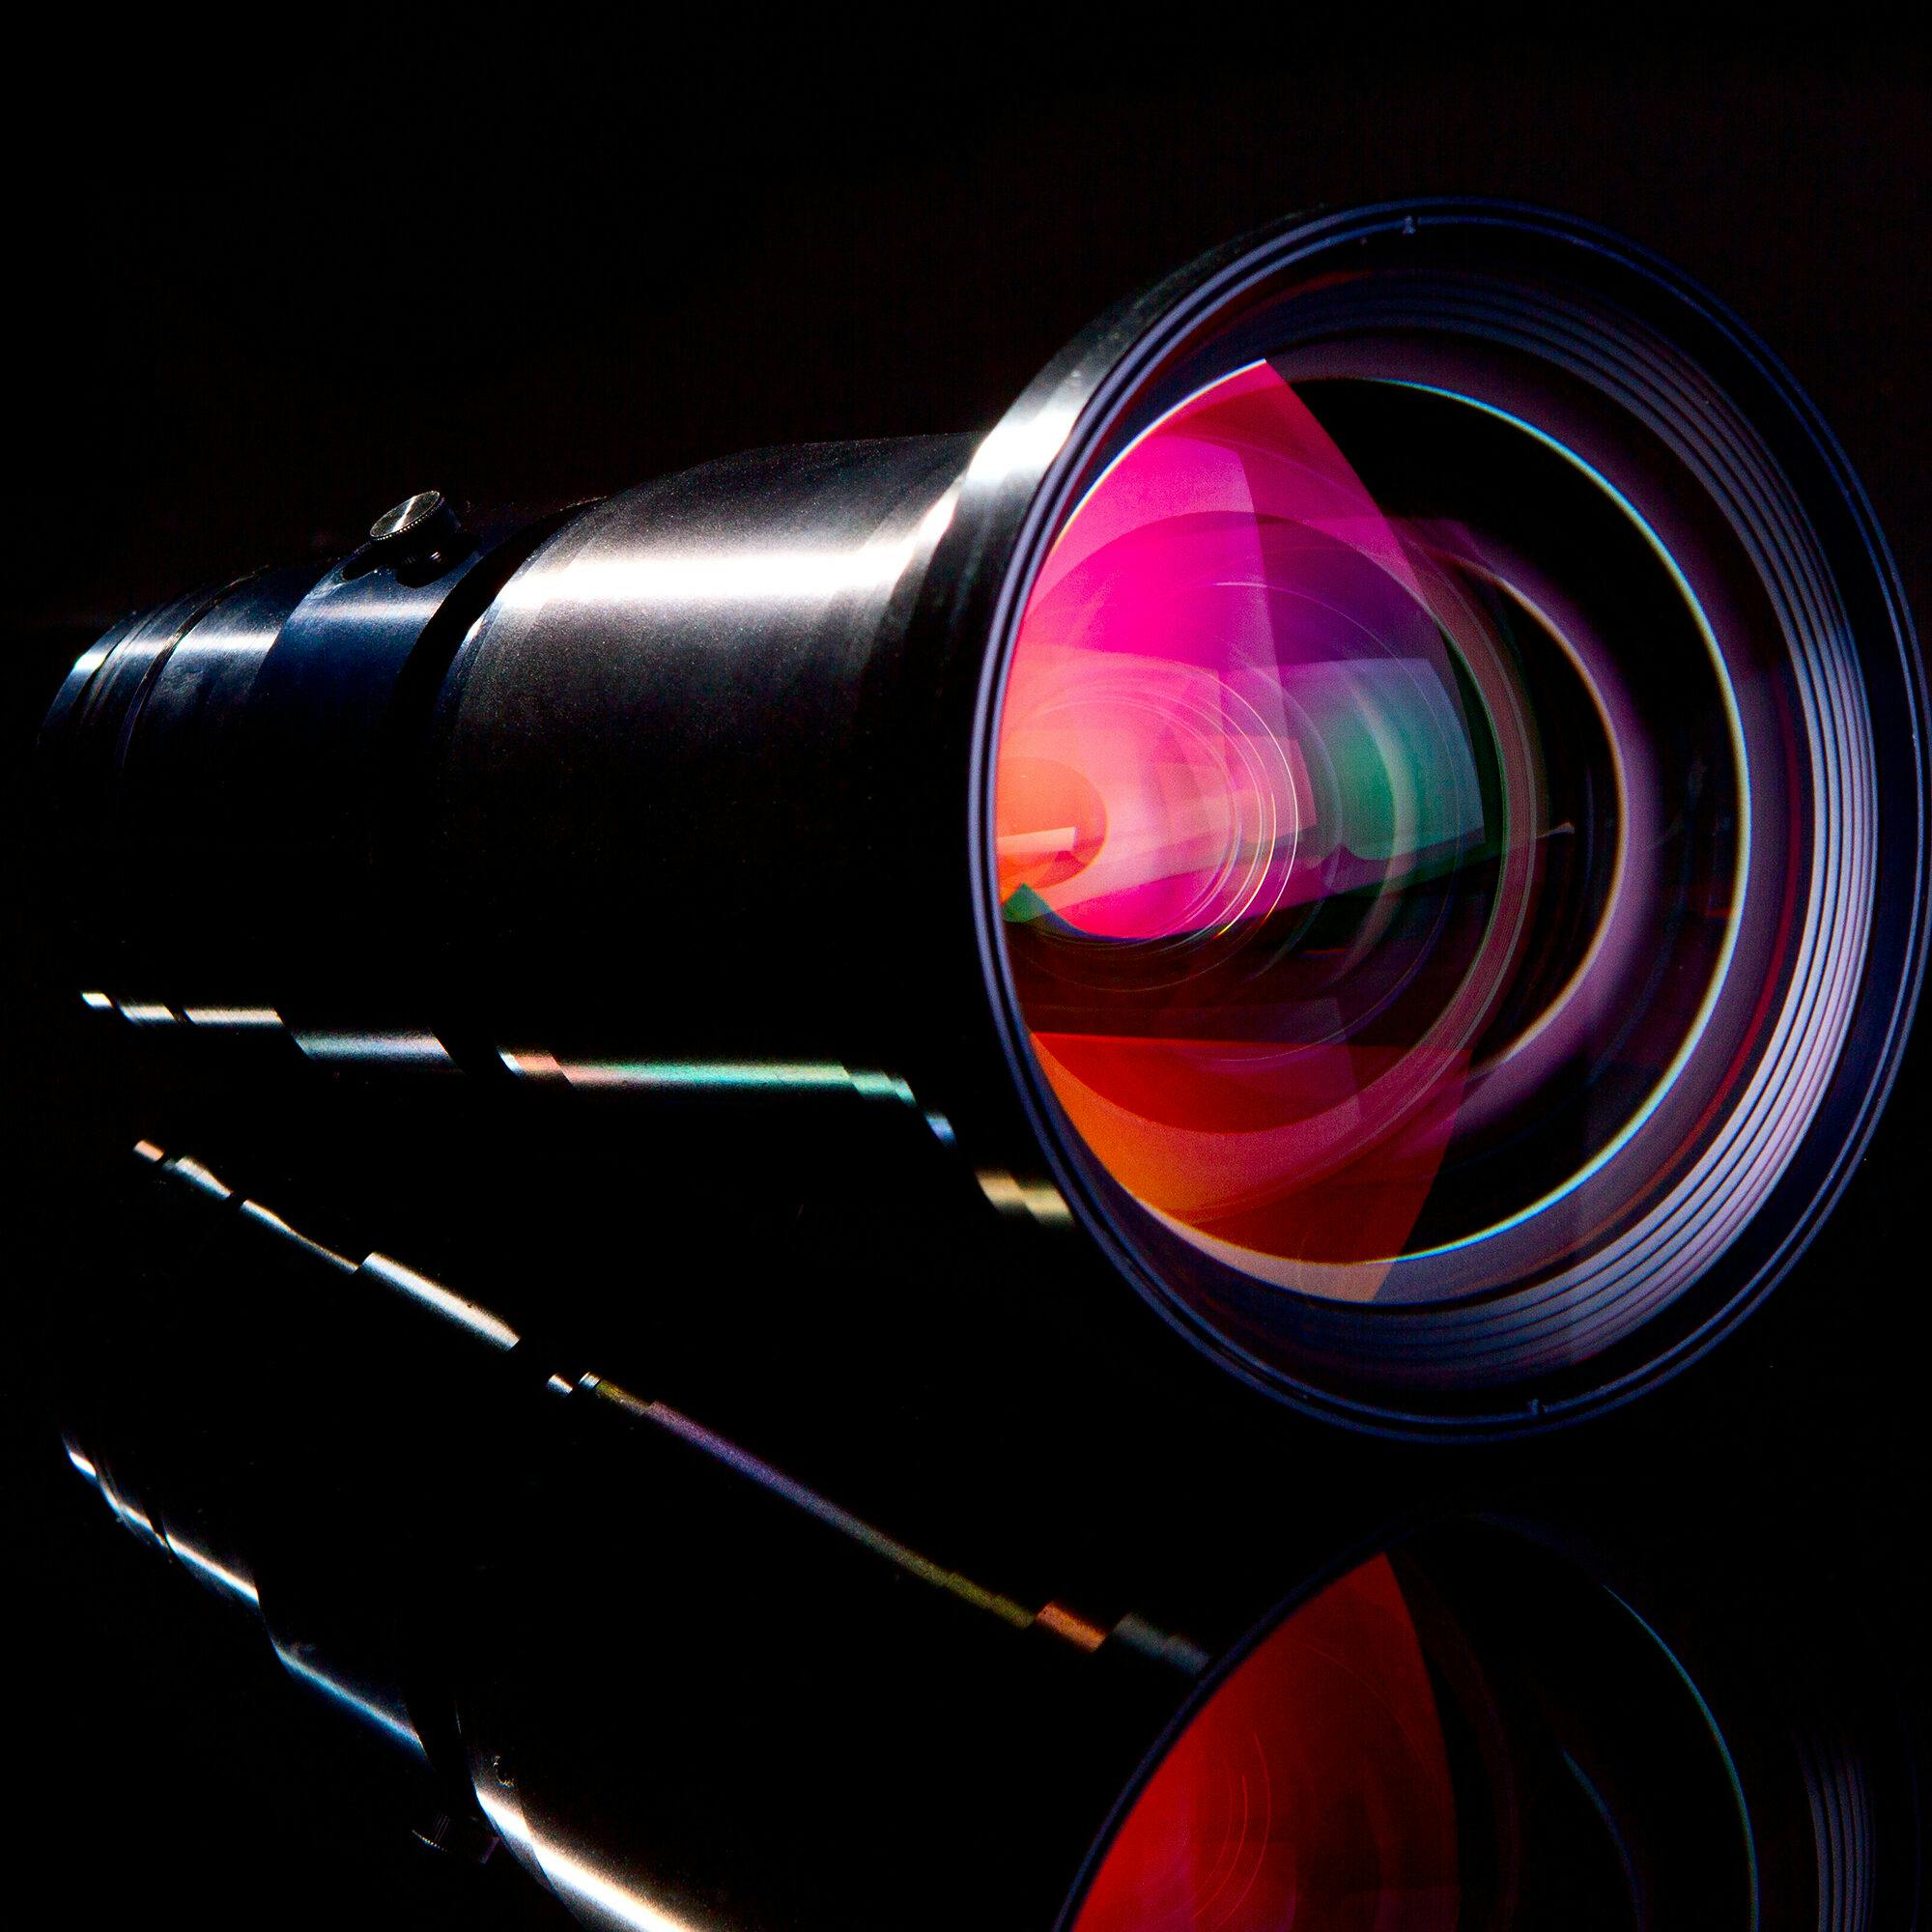 Cinema lense from In-Vision